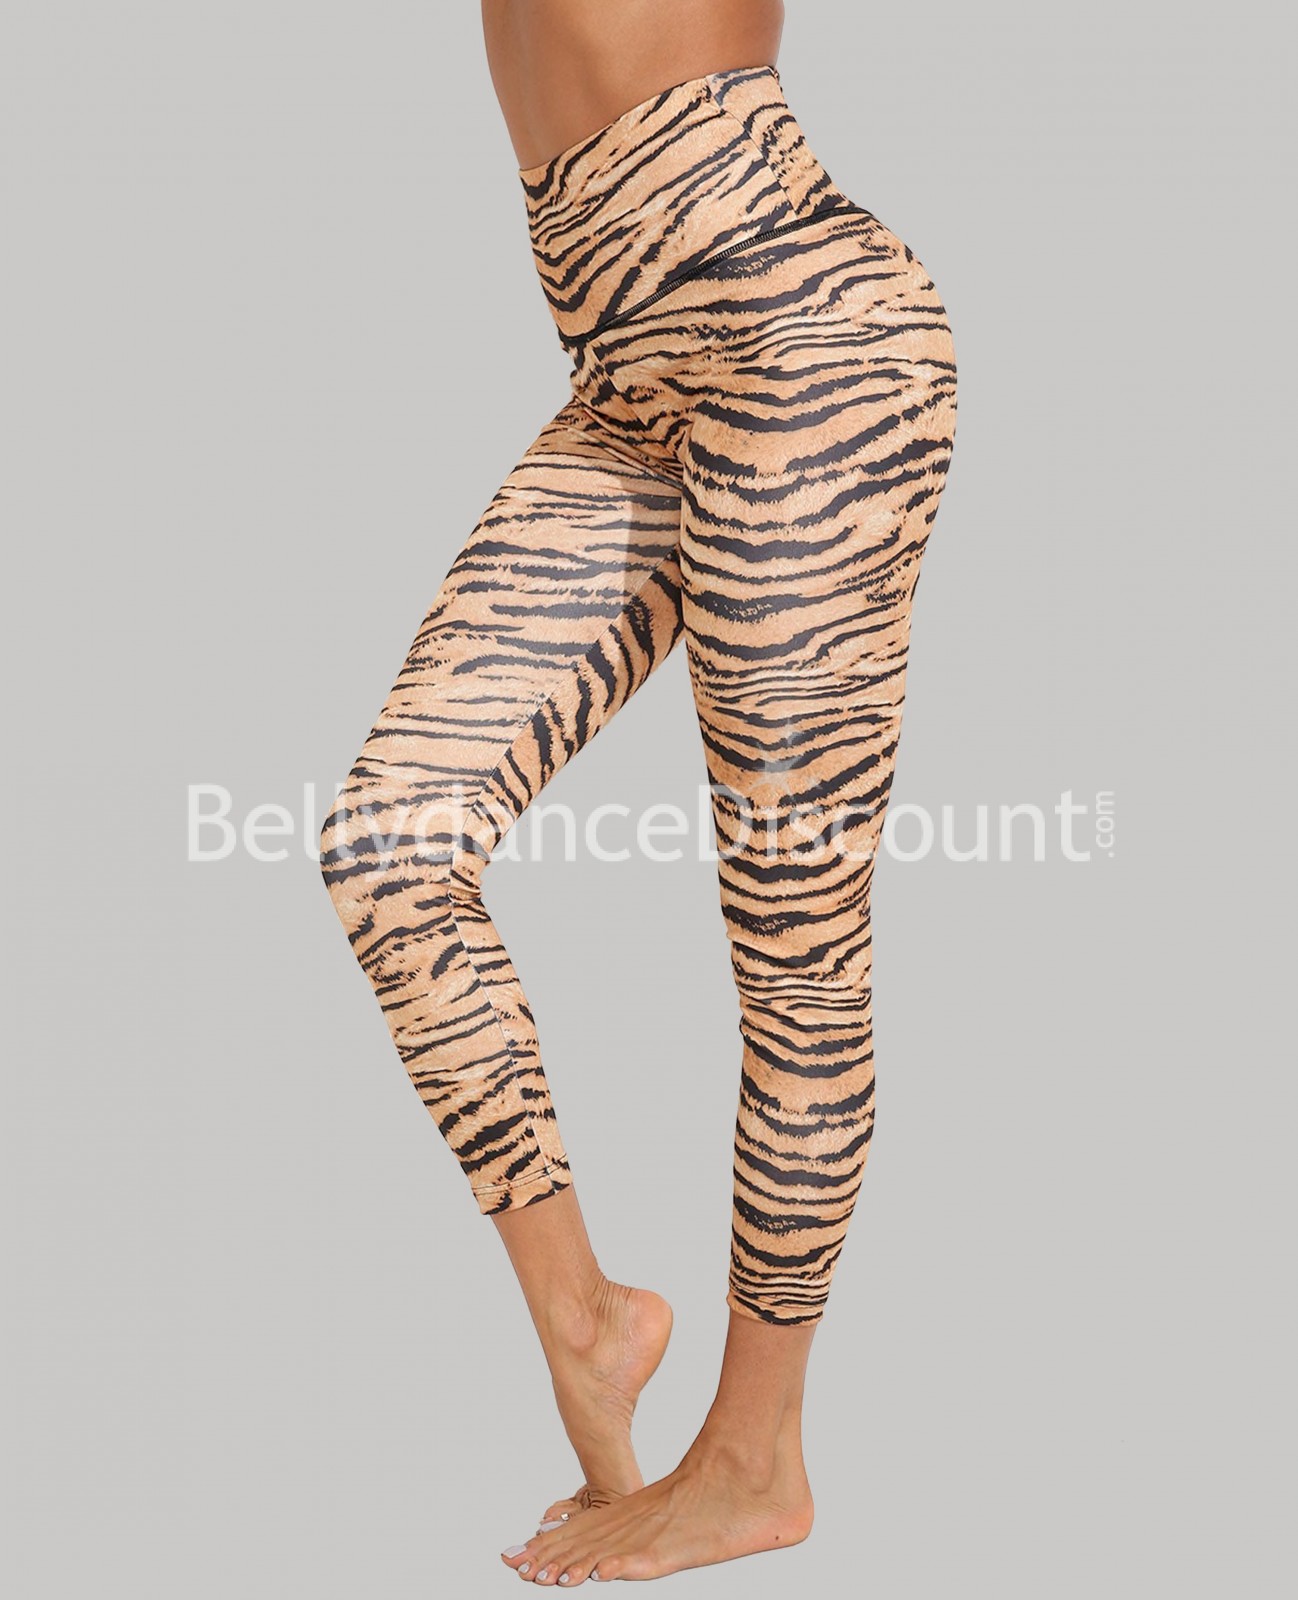 Zebra-print dance leggings